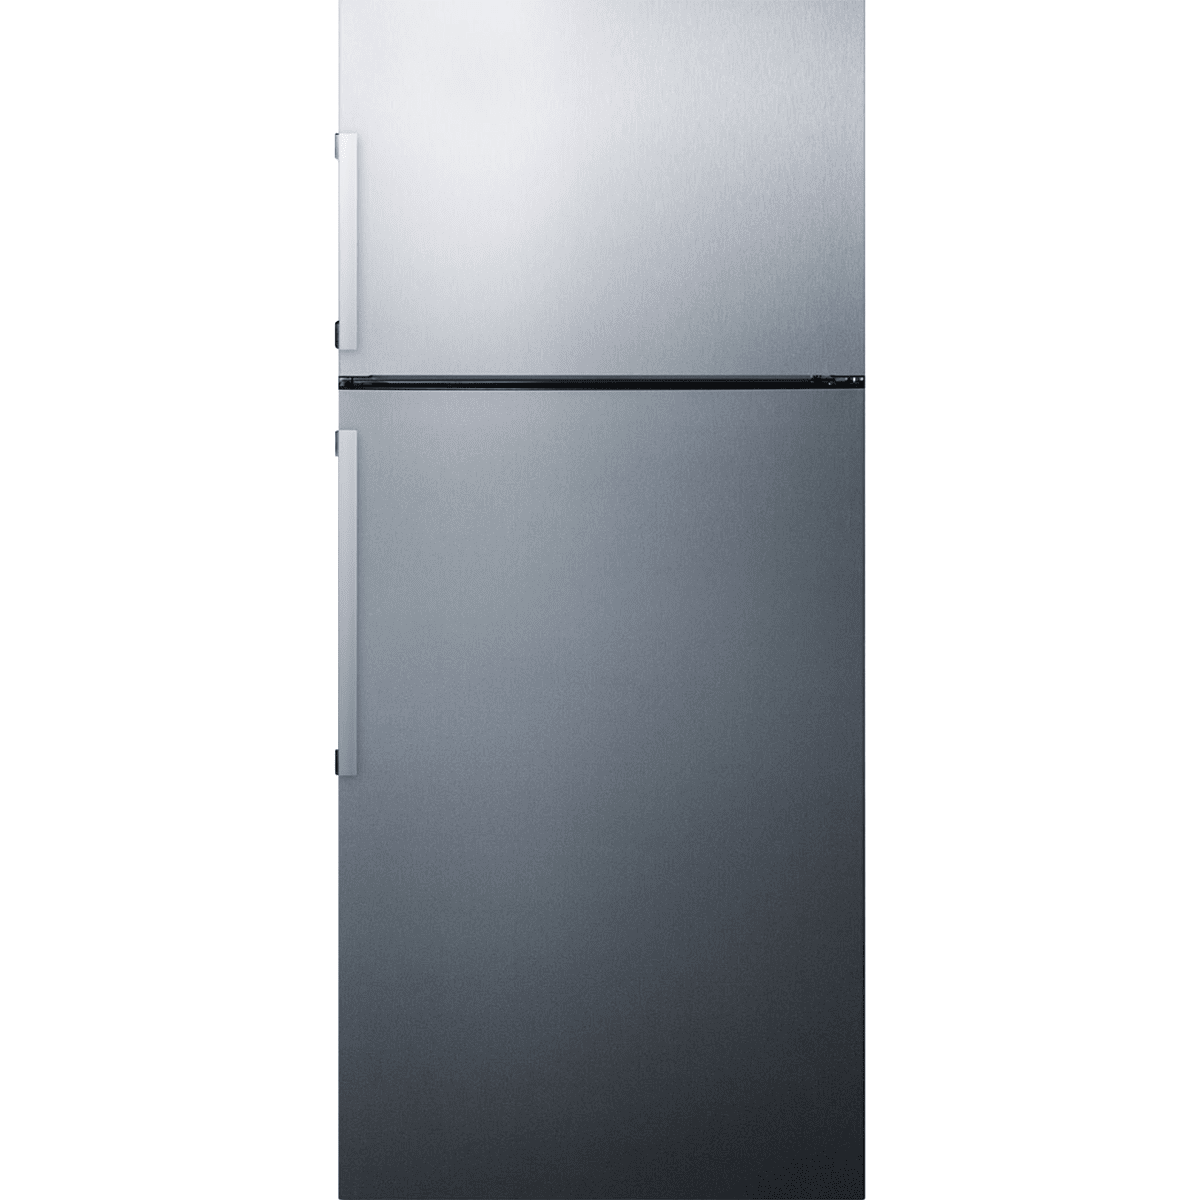 SUMMIT 13 Cu. Ft. Energy Star Refrigerator W/ Top Freezer